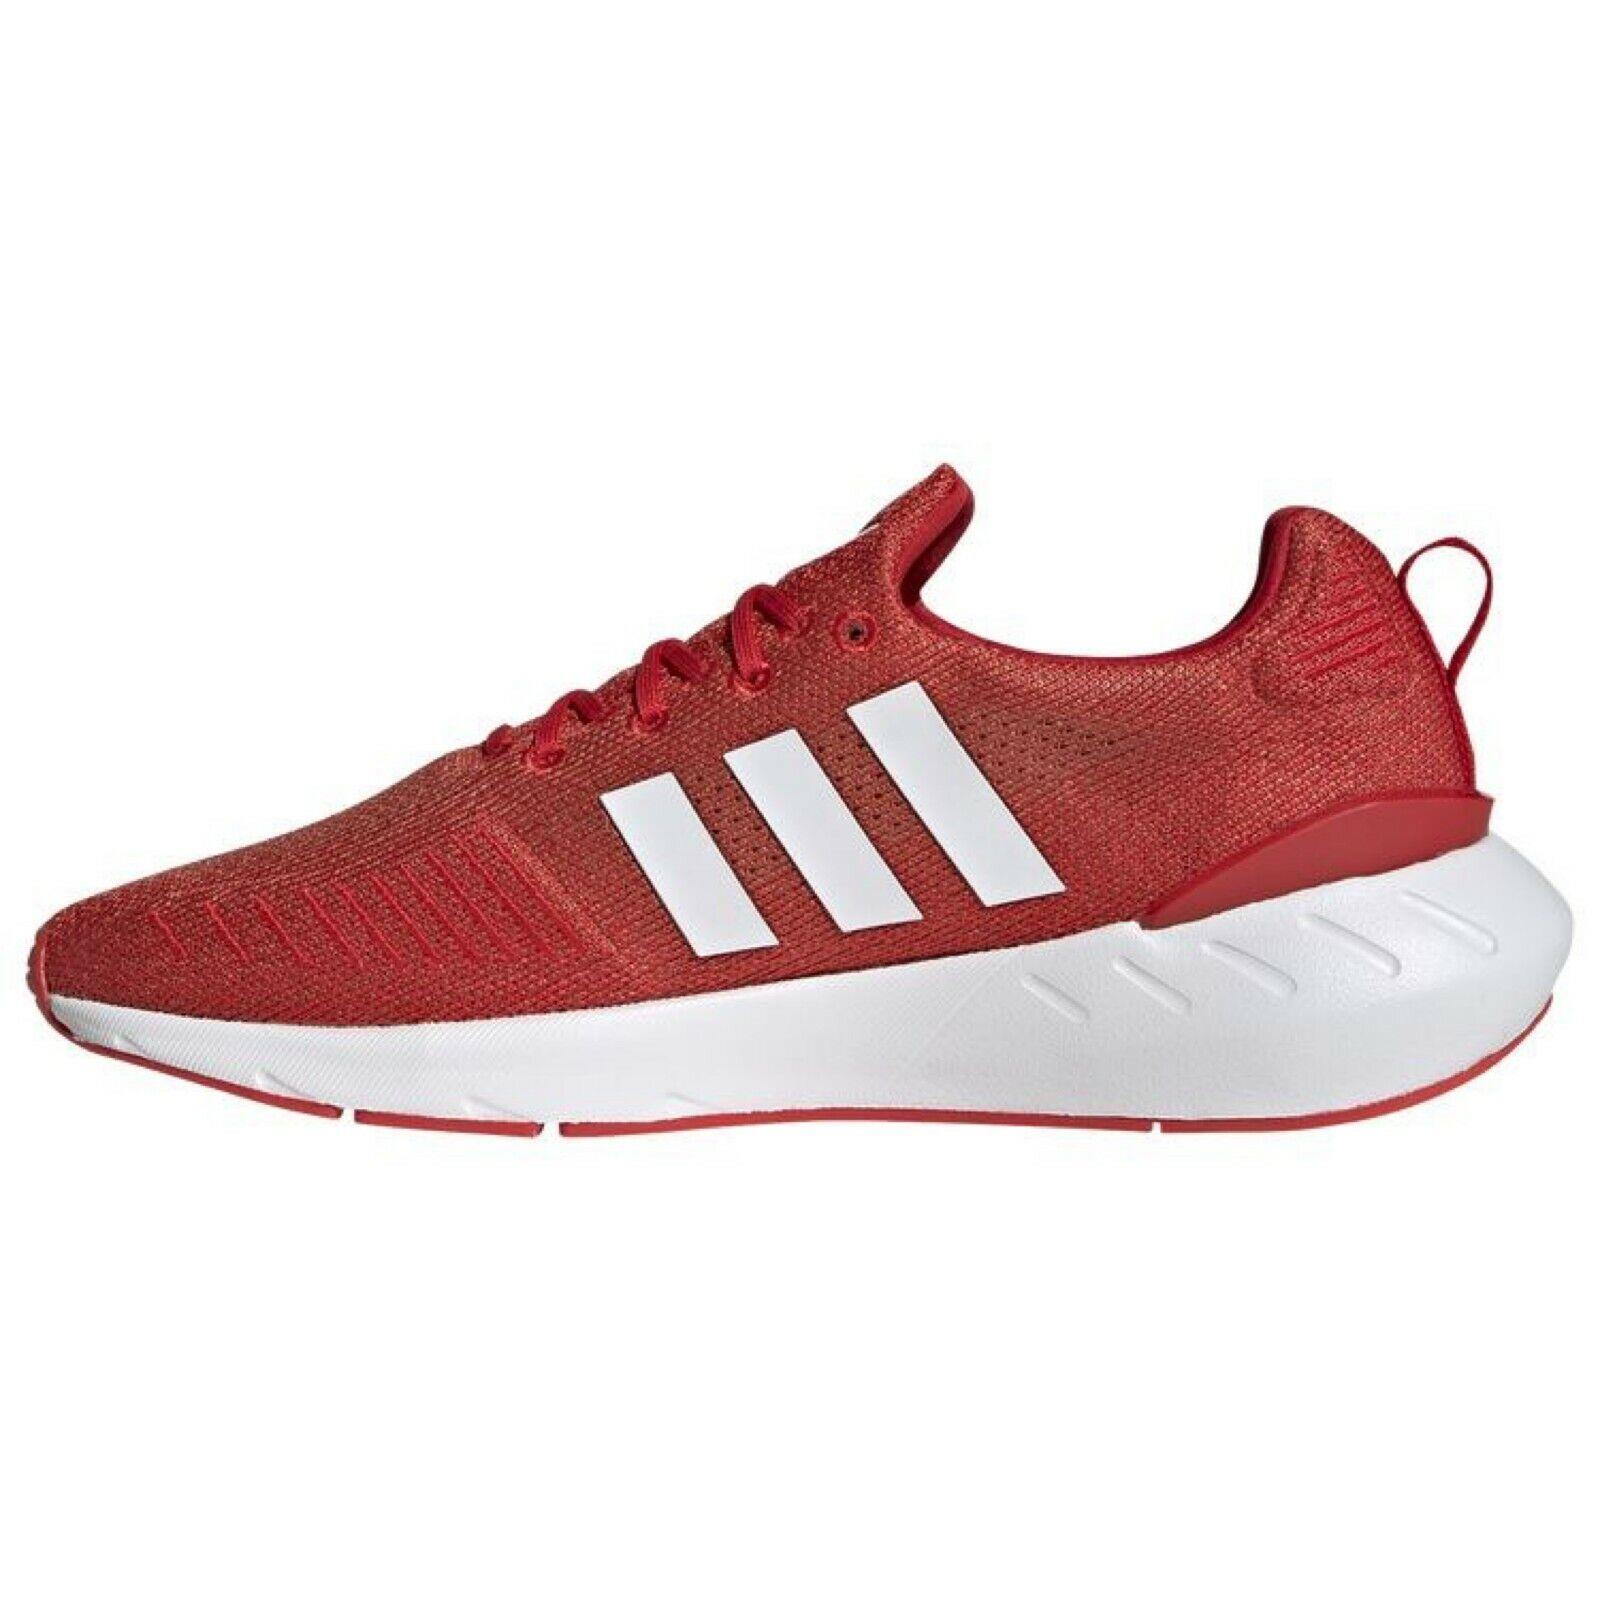 Adidas shoes Originals Swift Run - Red , Red/Black Manufacturer 8